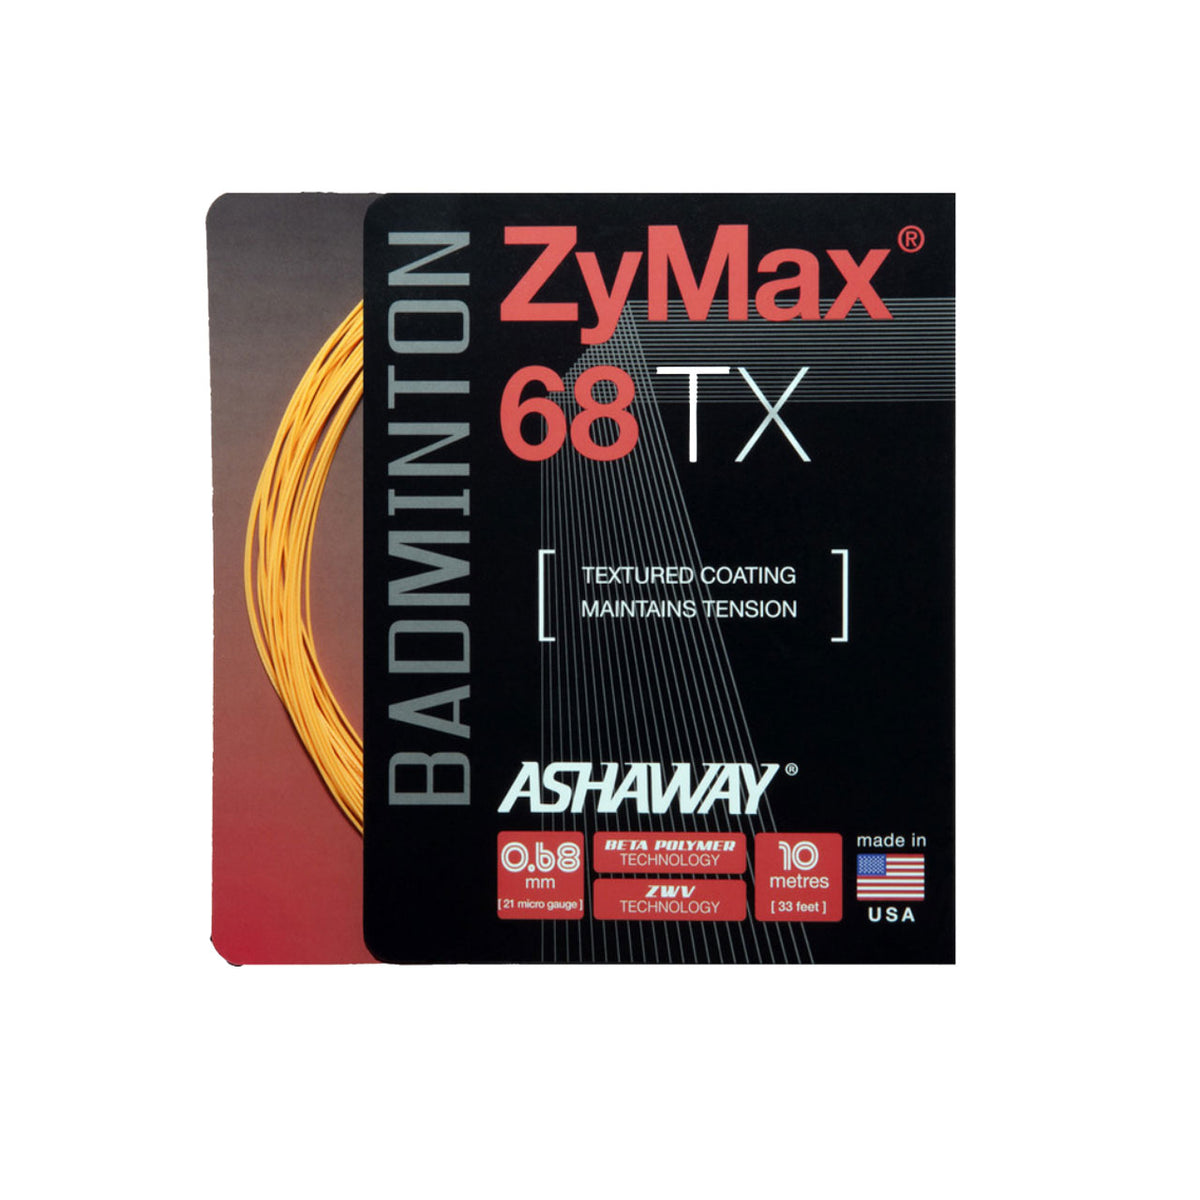 Ashaway Zymax 68TX String (10m Set) Orange